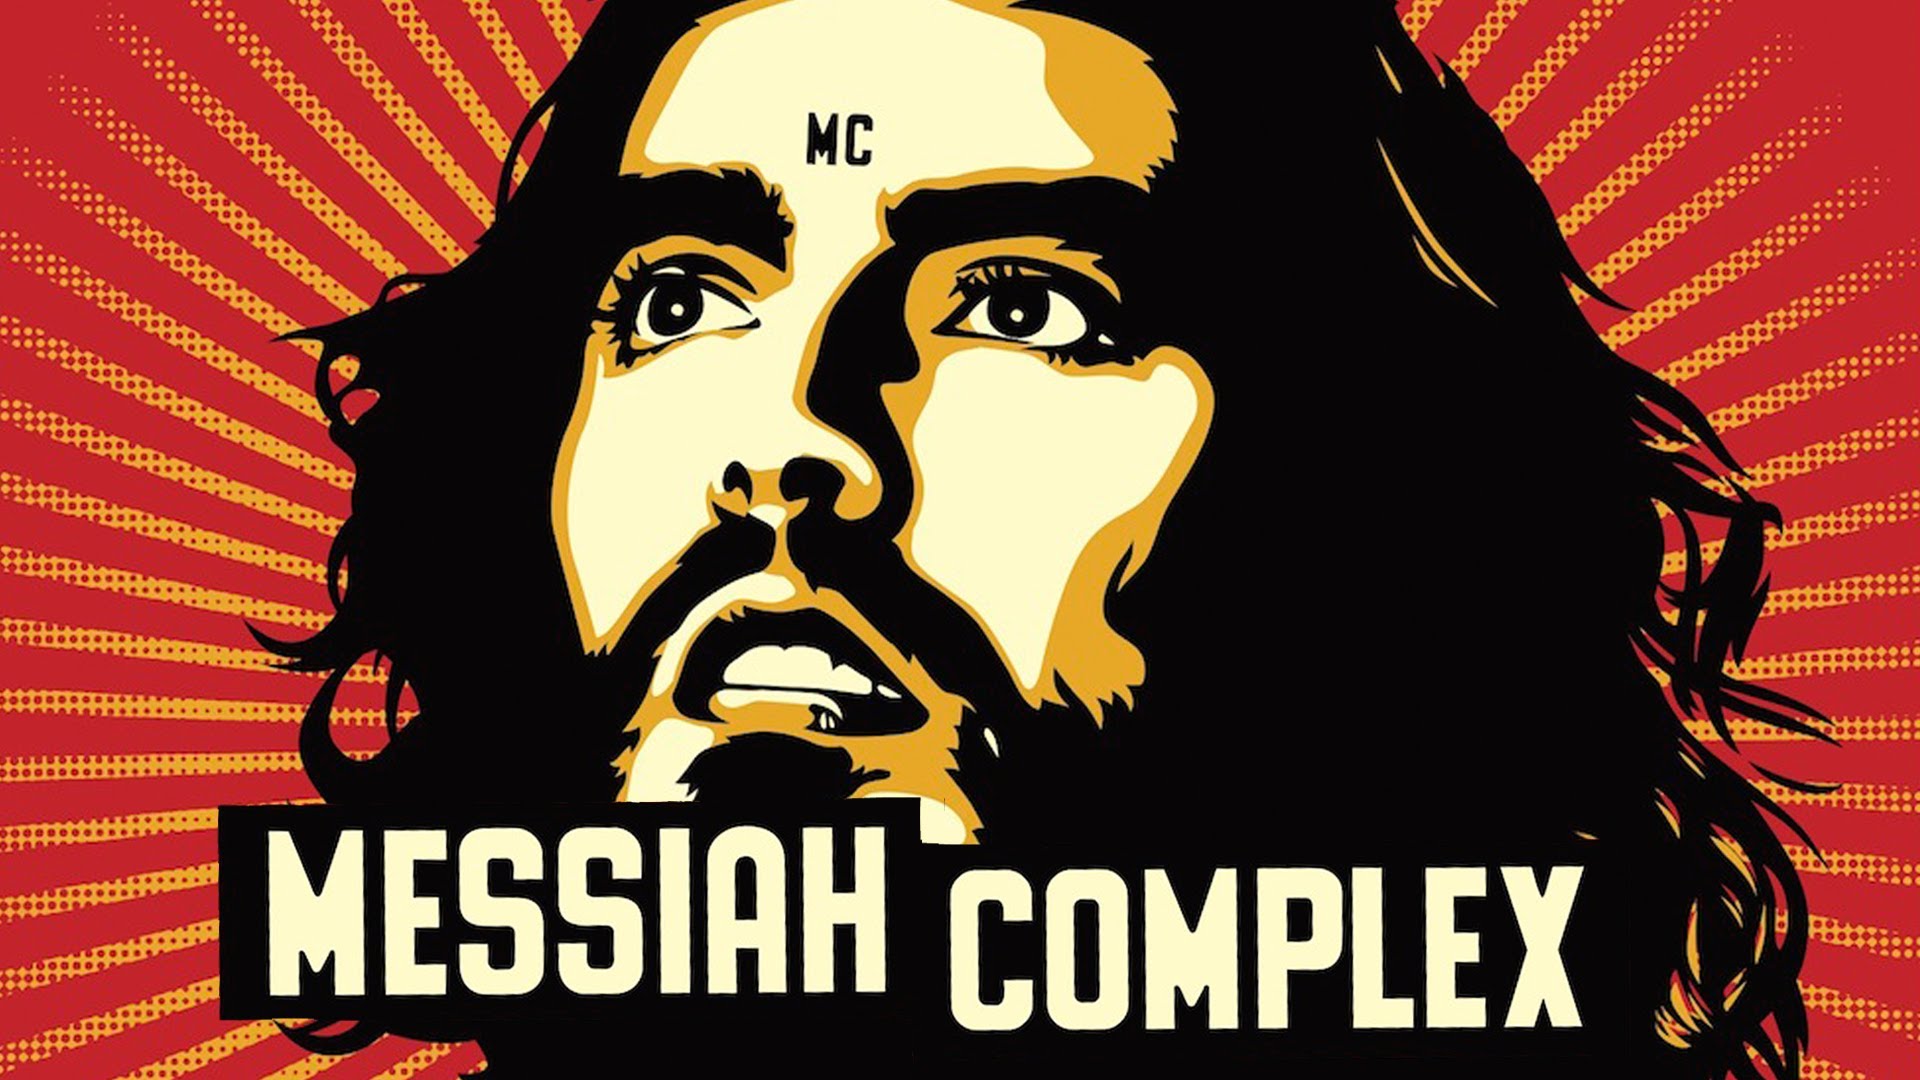 Russell Brand MESSIAH COMPLEX World Tour 2013